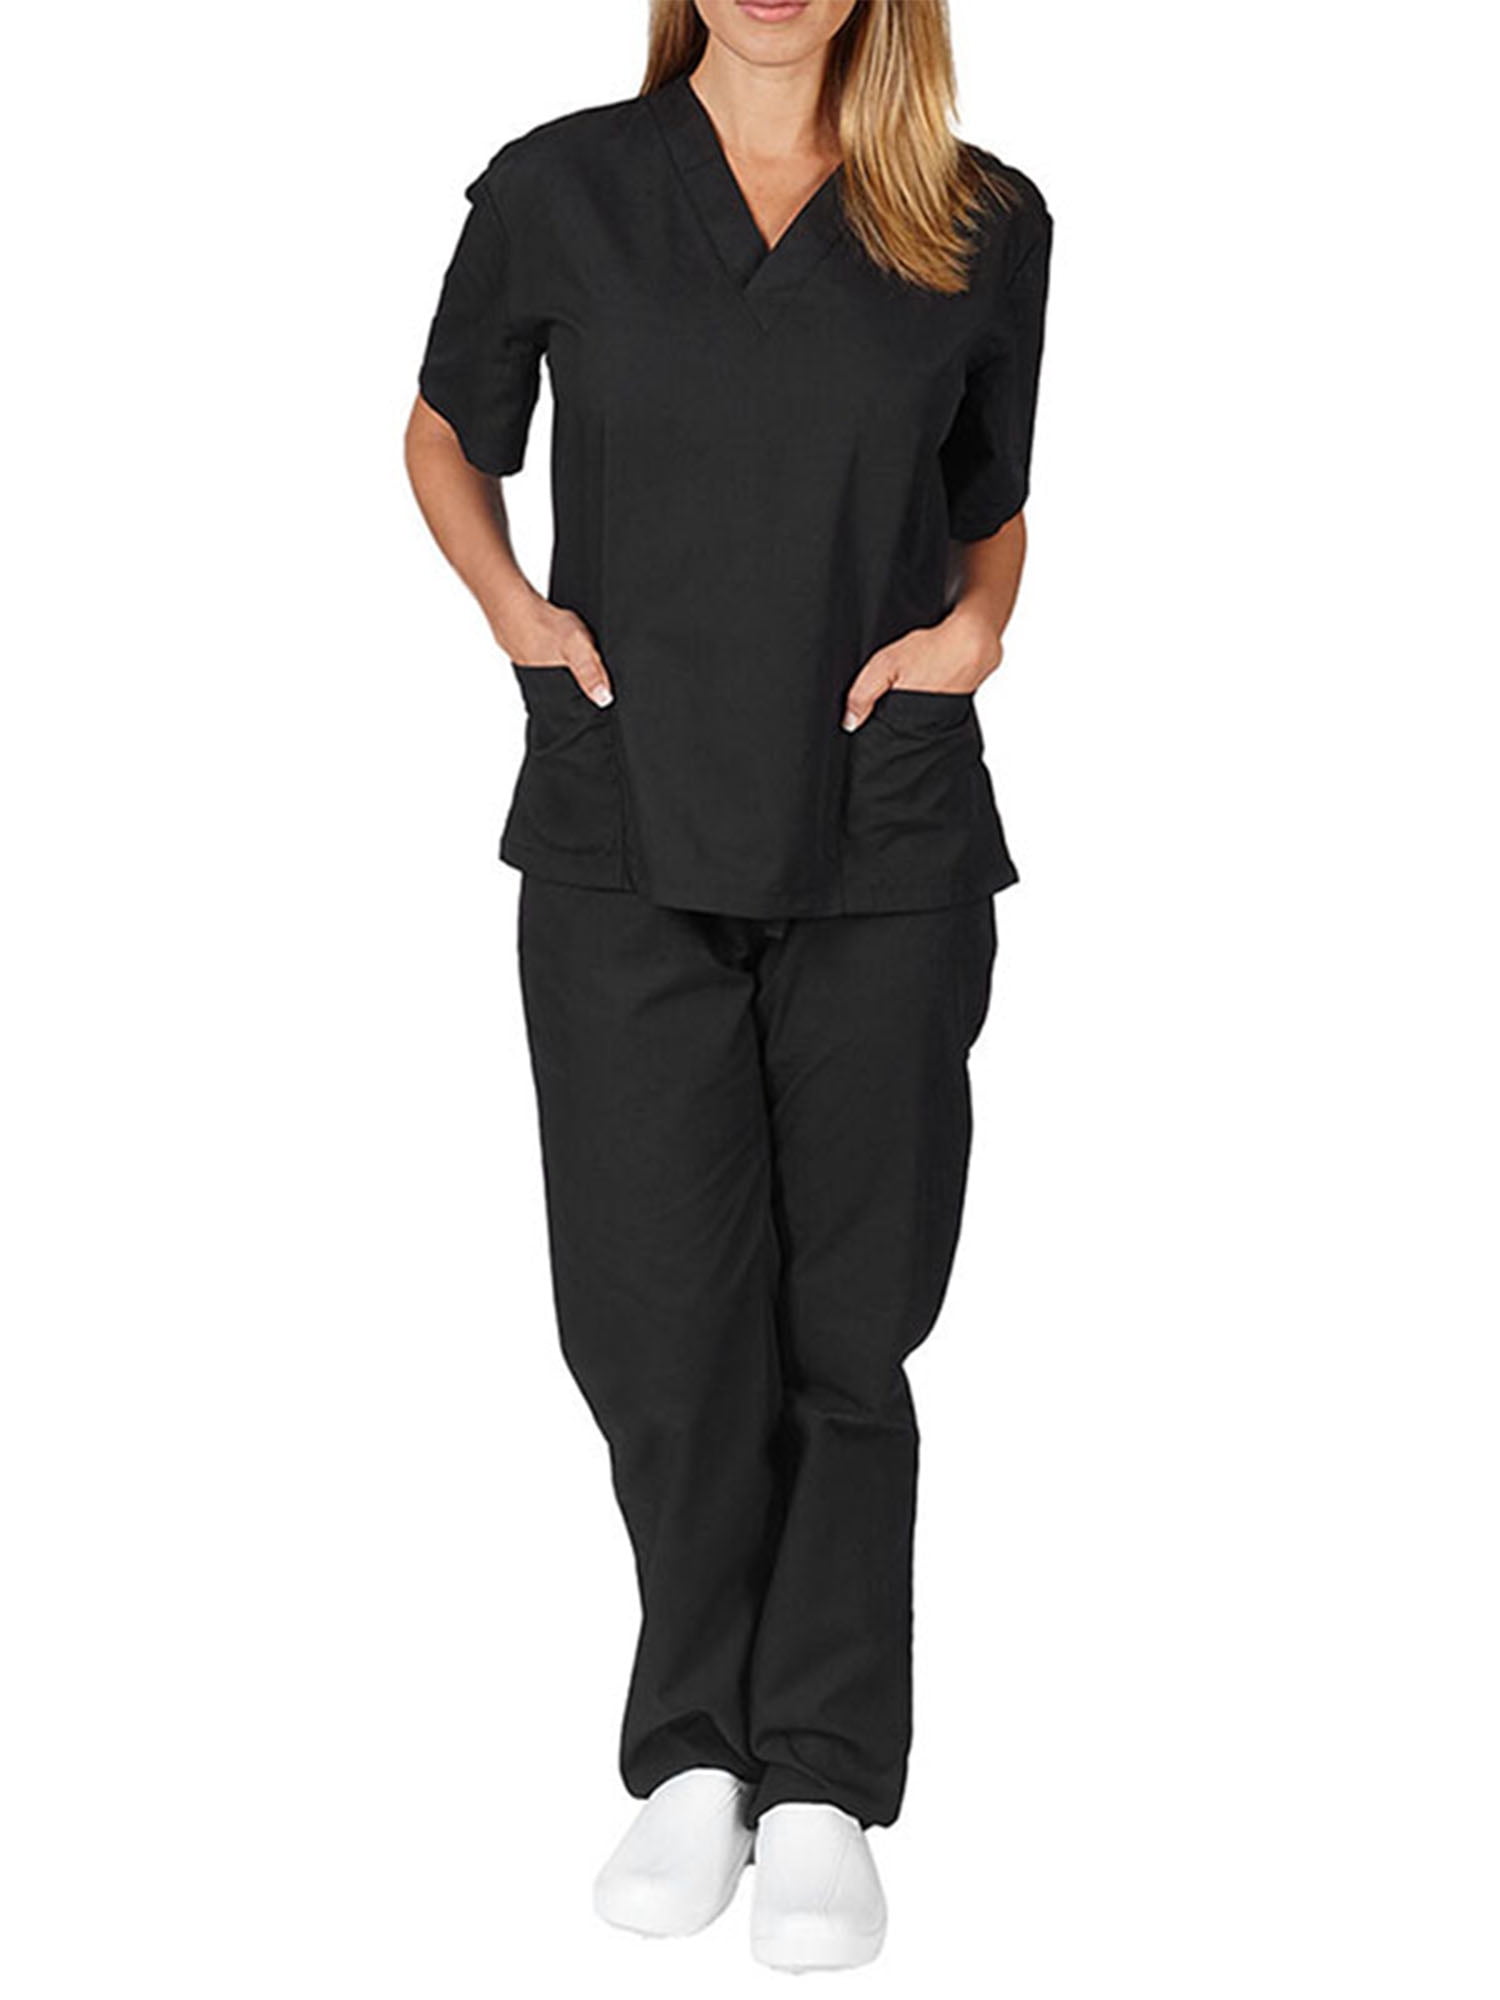 Zodanni Women Scrubs Medical Uniform 2 Pieces Scrub Set Solid Color Tops  And Pants Elastic Waist Workwear Nursing Home Medical-Scrubs Black M 